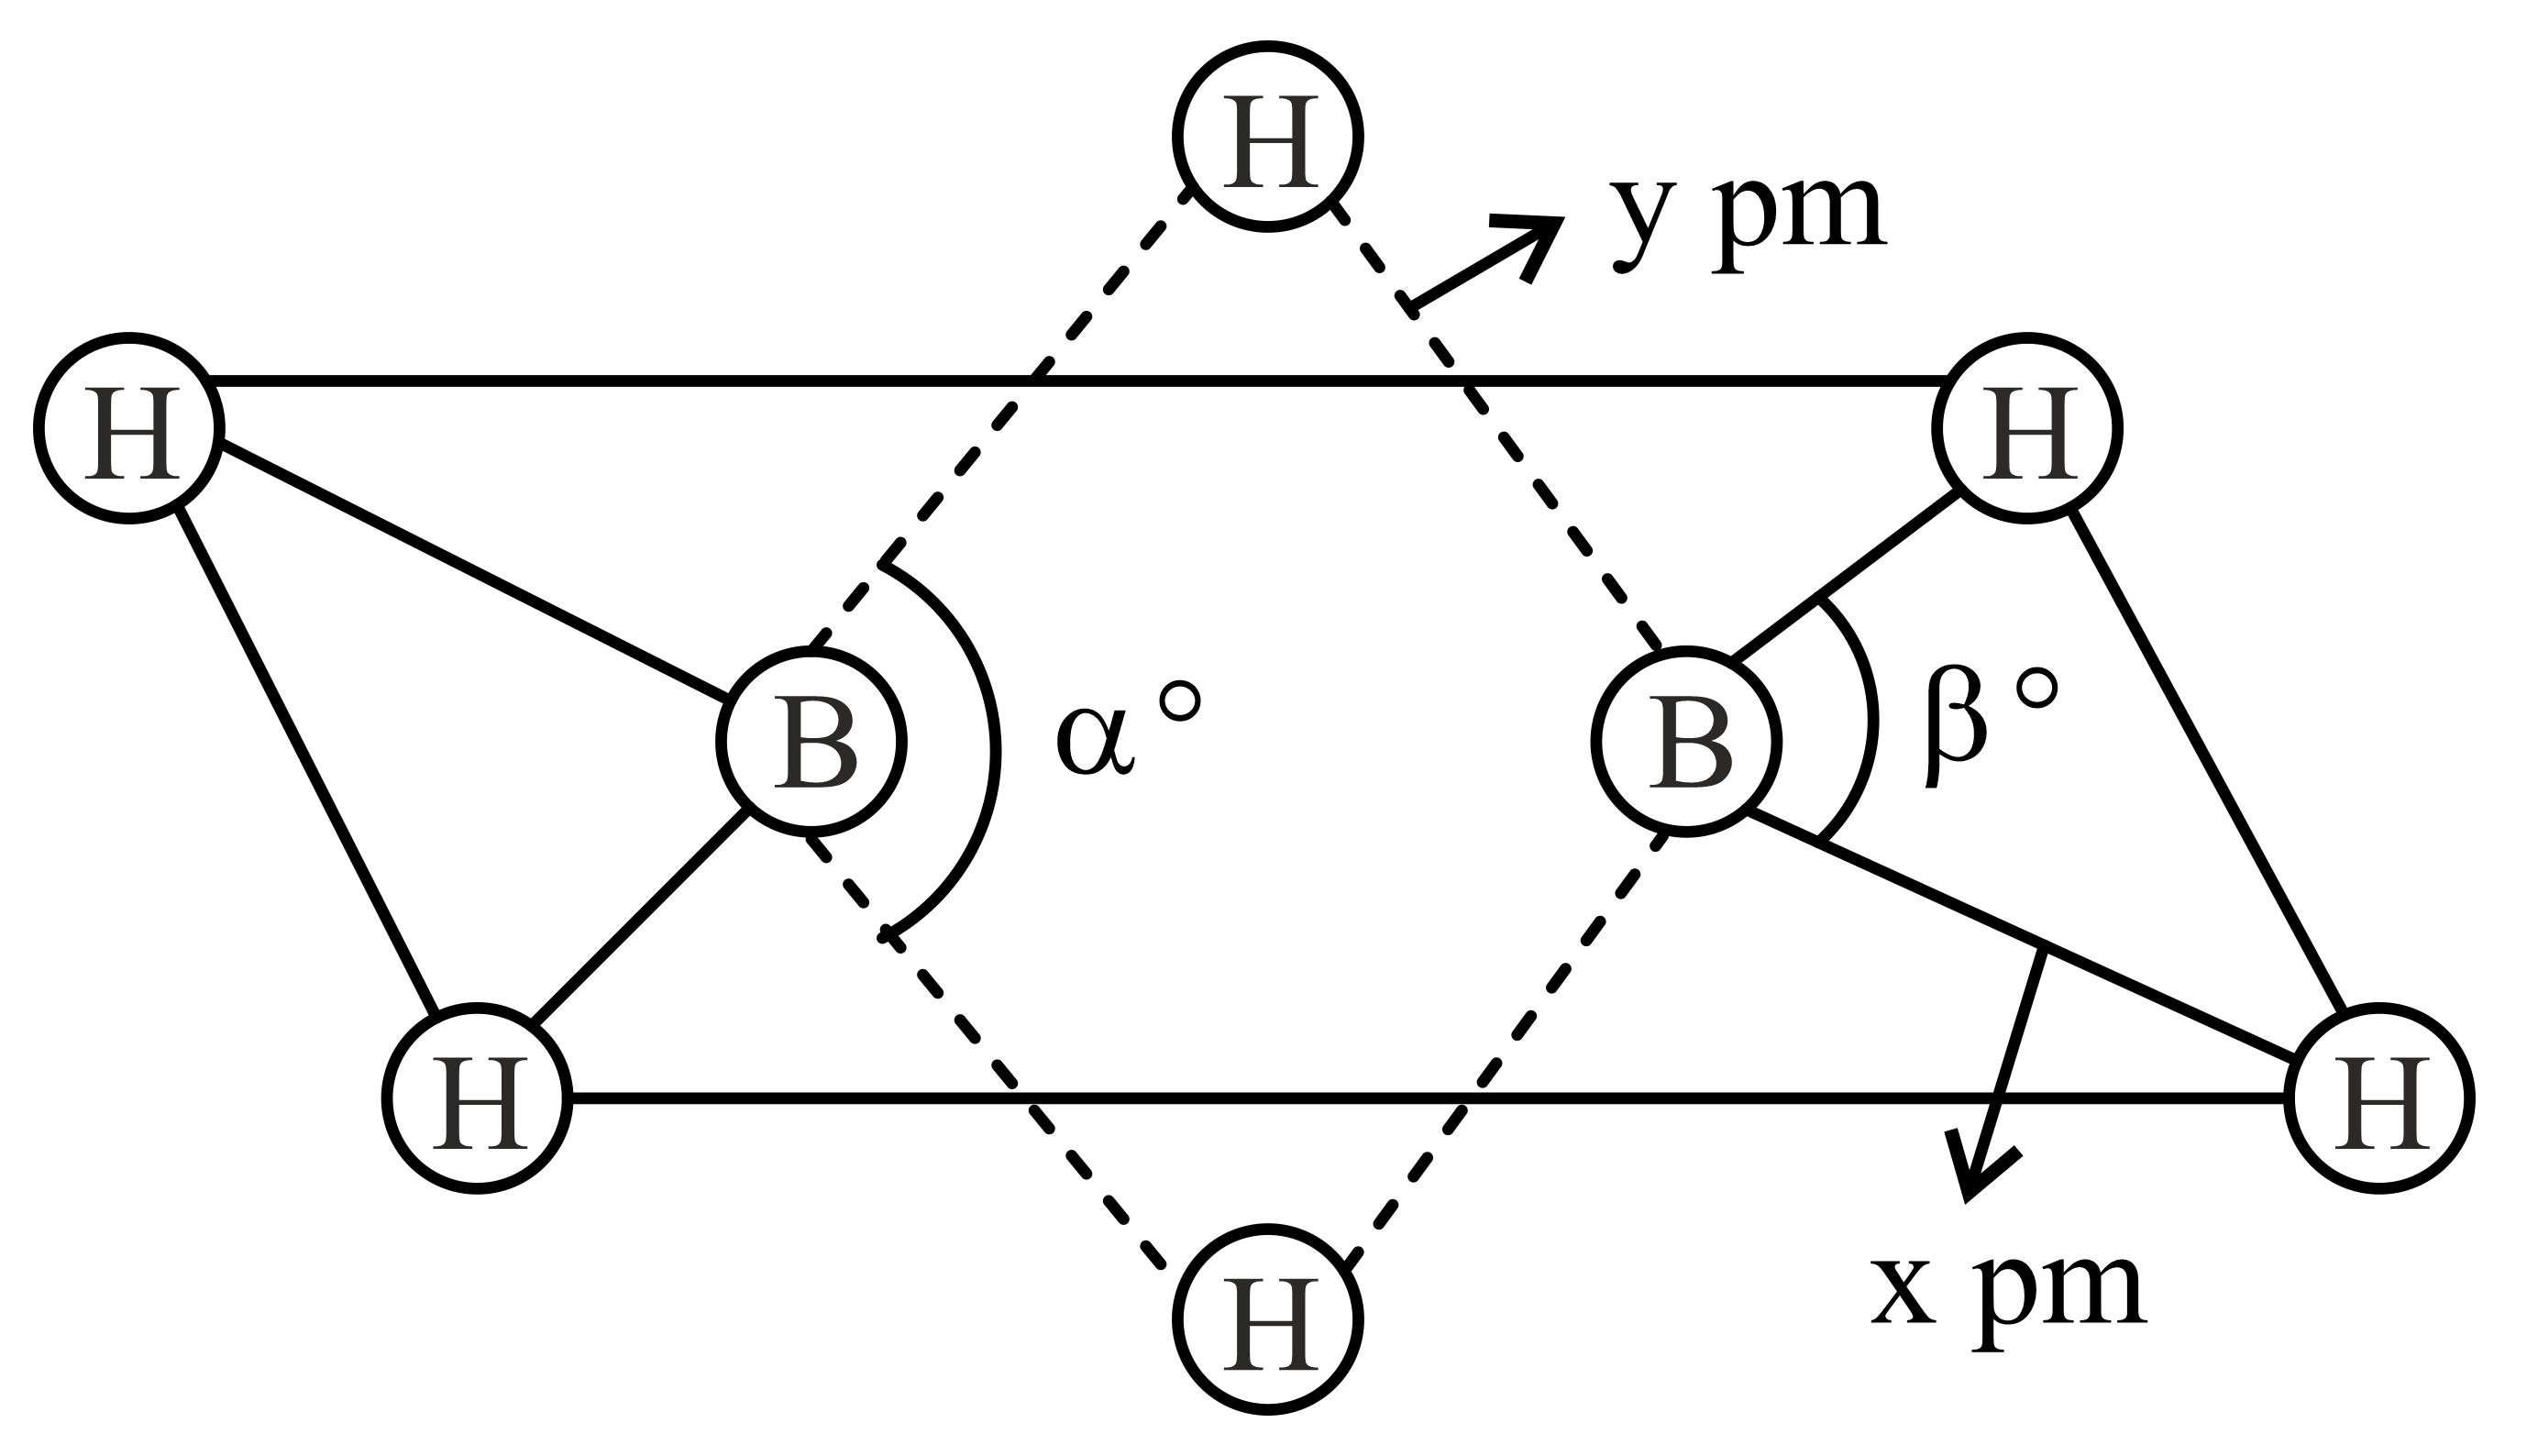 ORTEP-type diagram of the molecular structure of [(PMe 2 Ph) 3HReB 20 H...  | Download Scientific Diagram